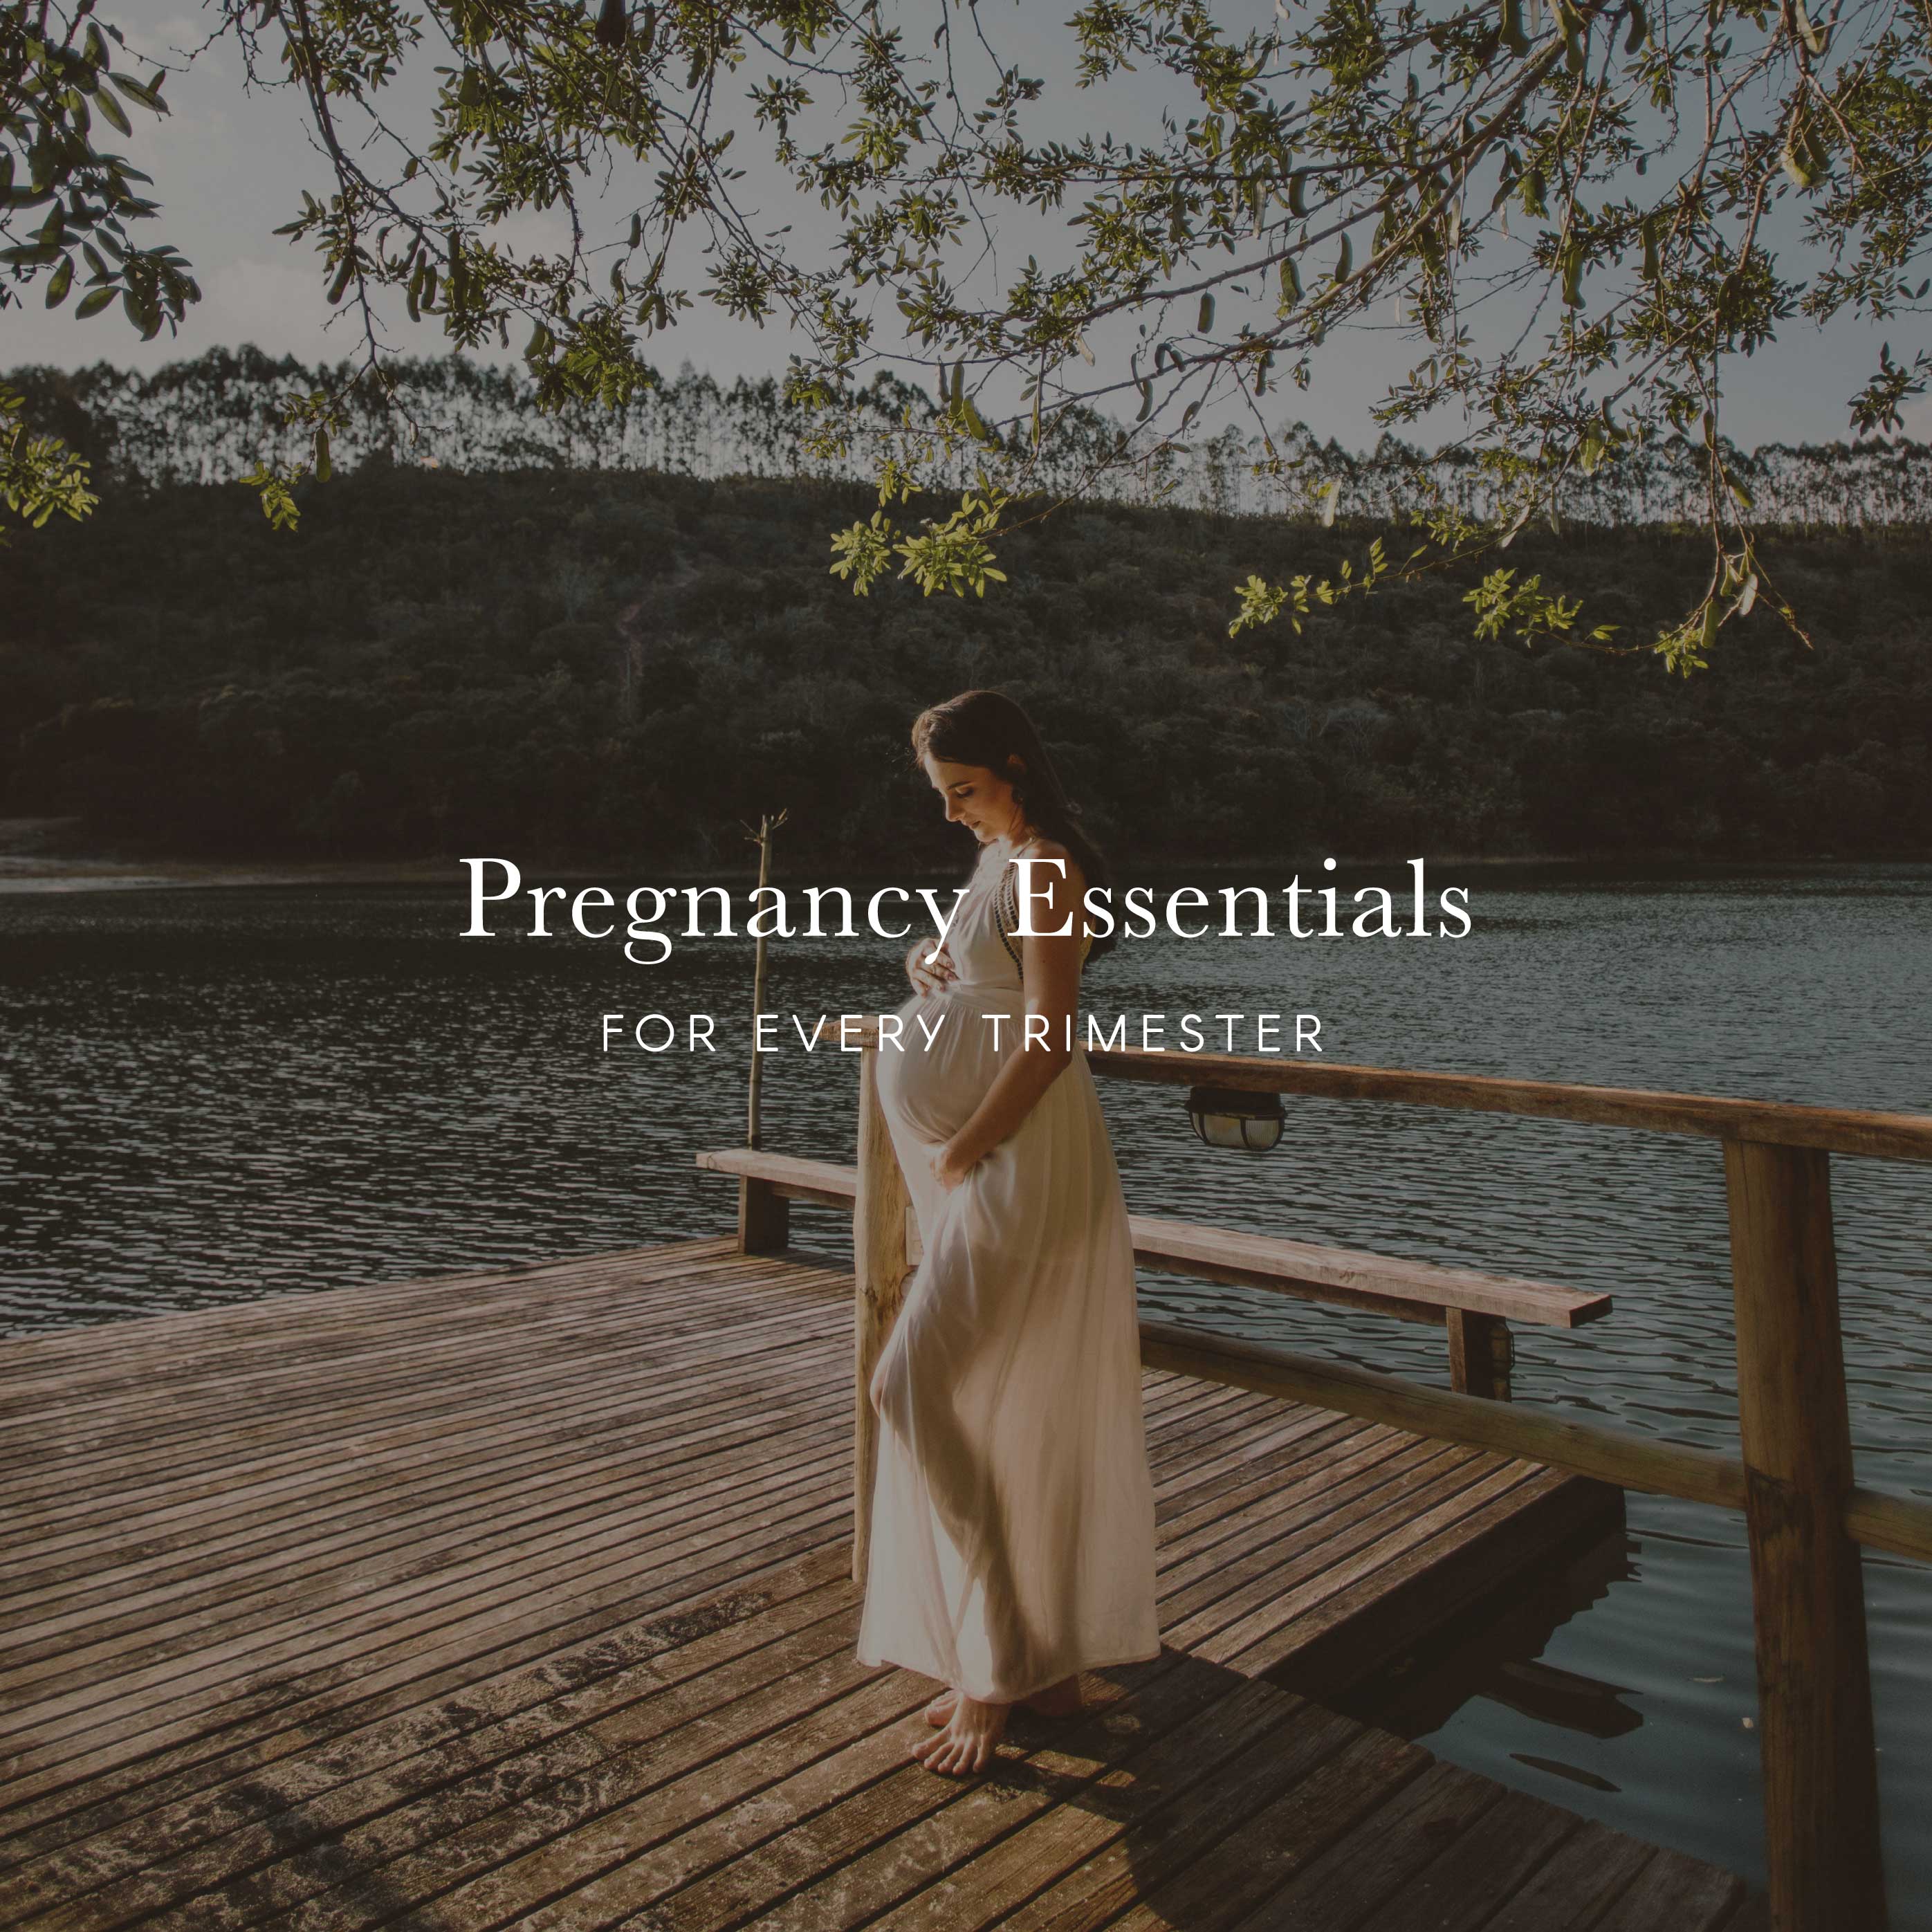 Pregnancy Essentials for Every Trimester